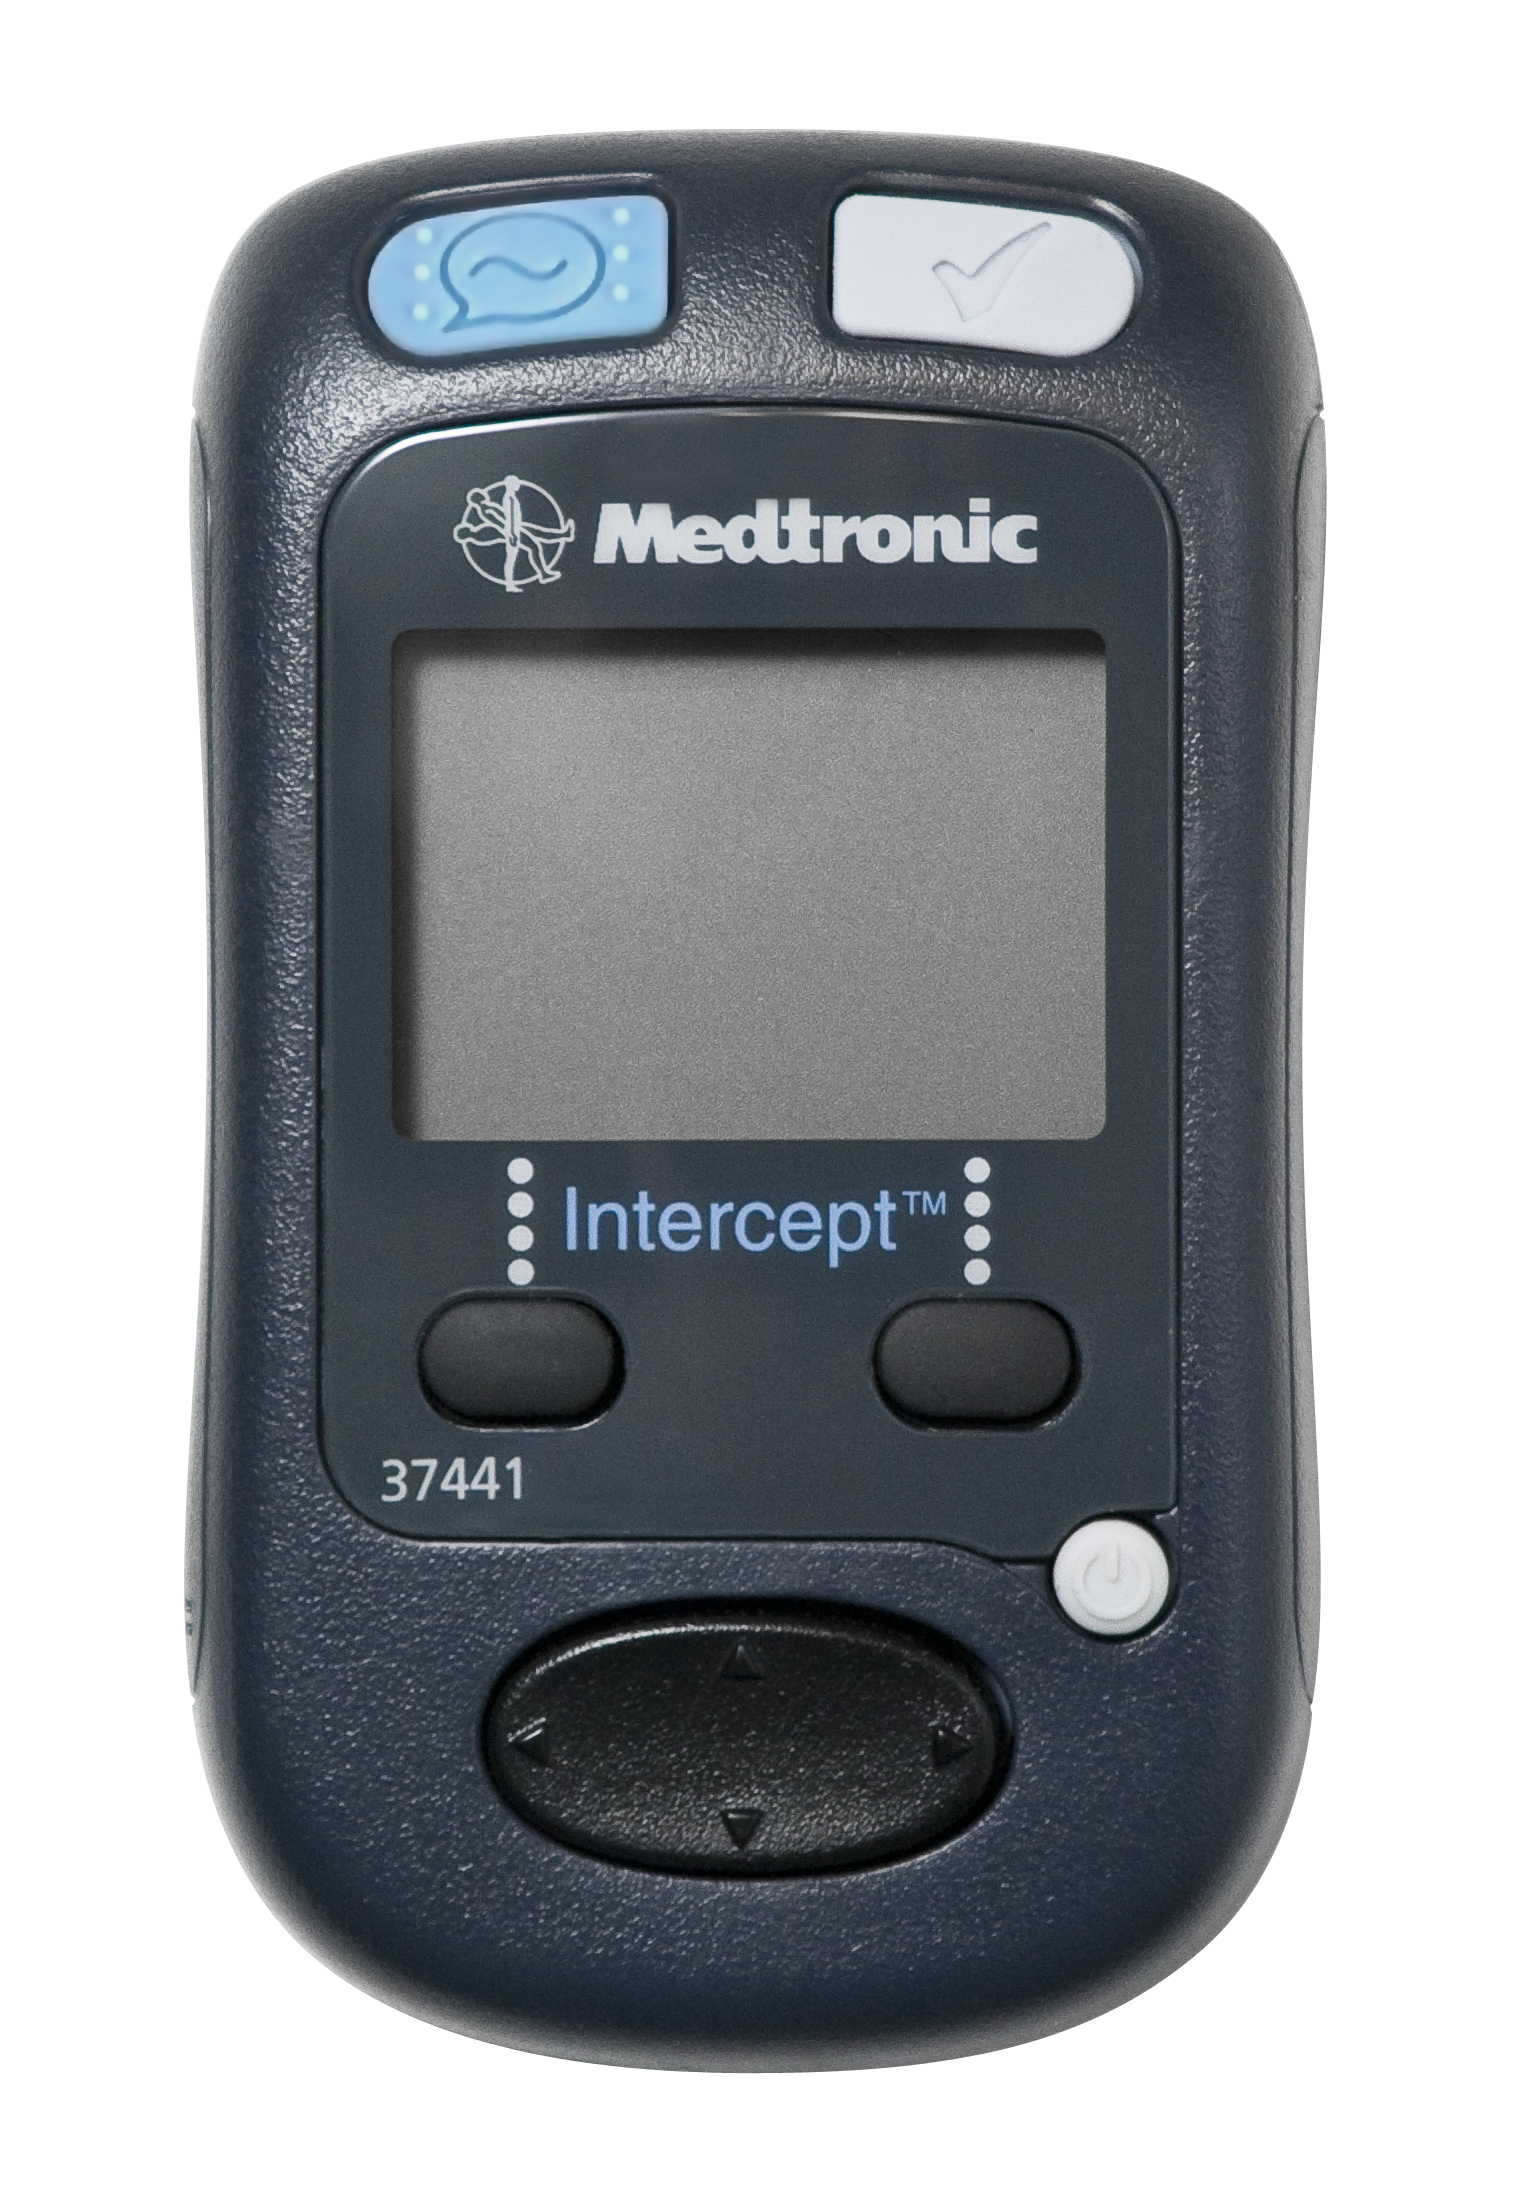 Medtronic Intercept(TM) patient programmer